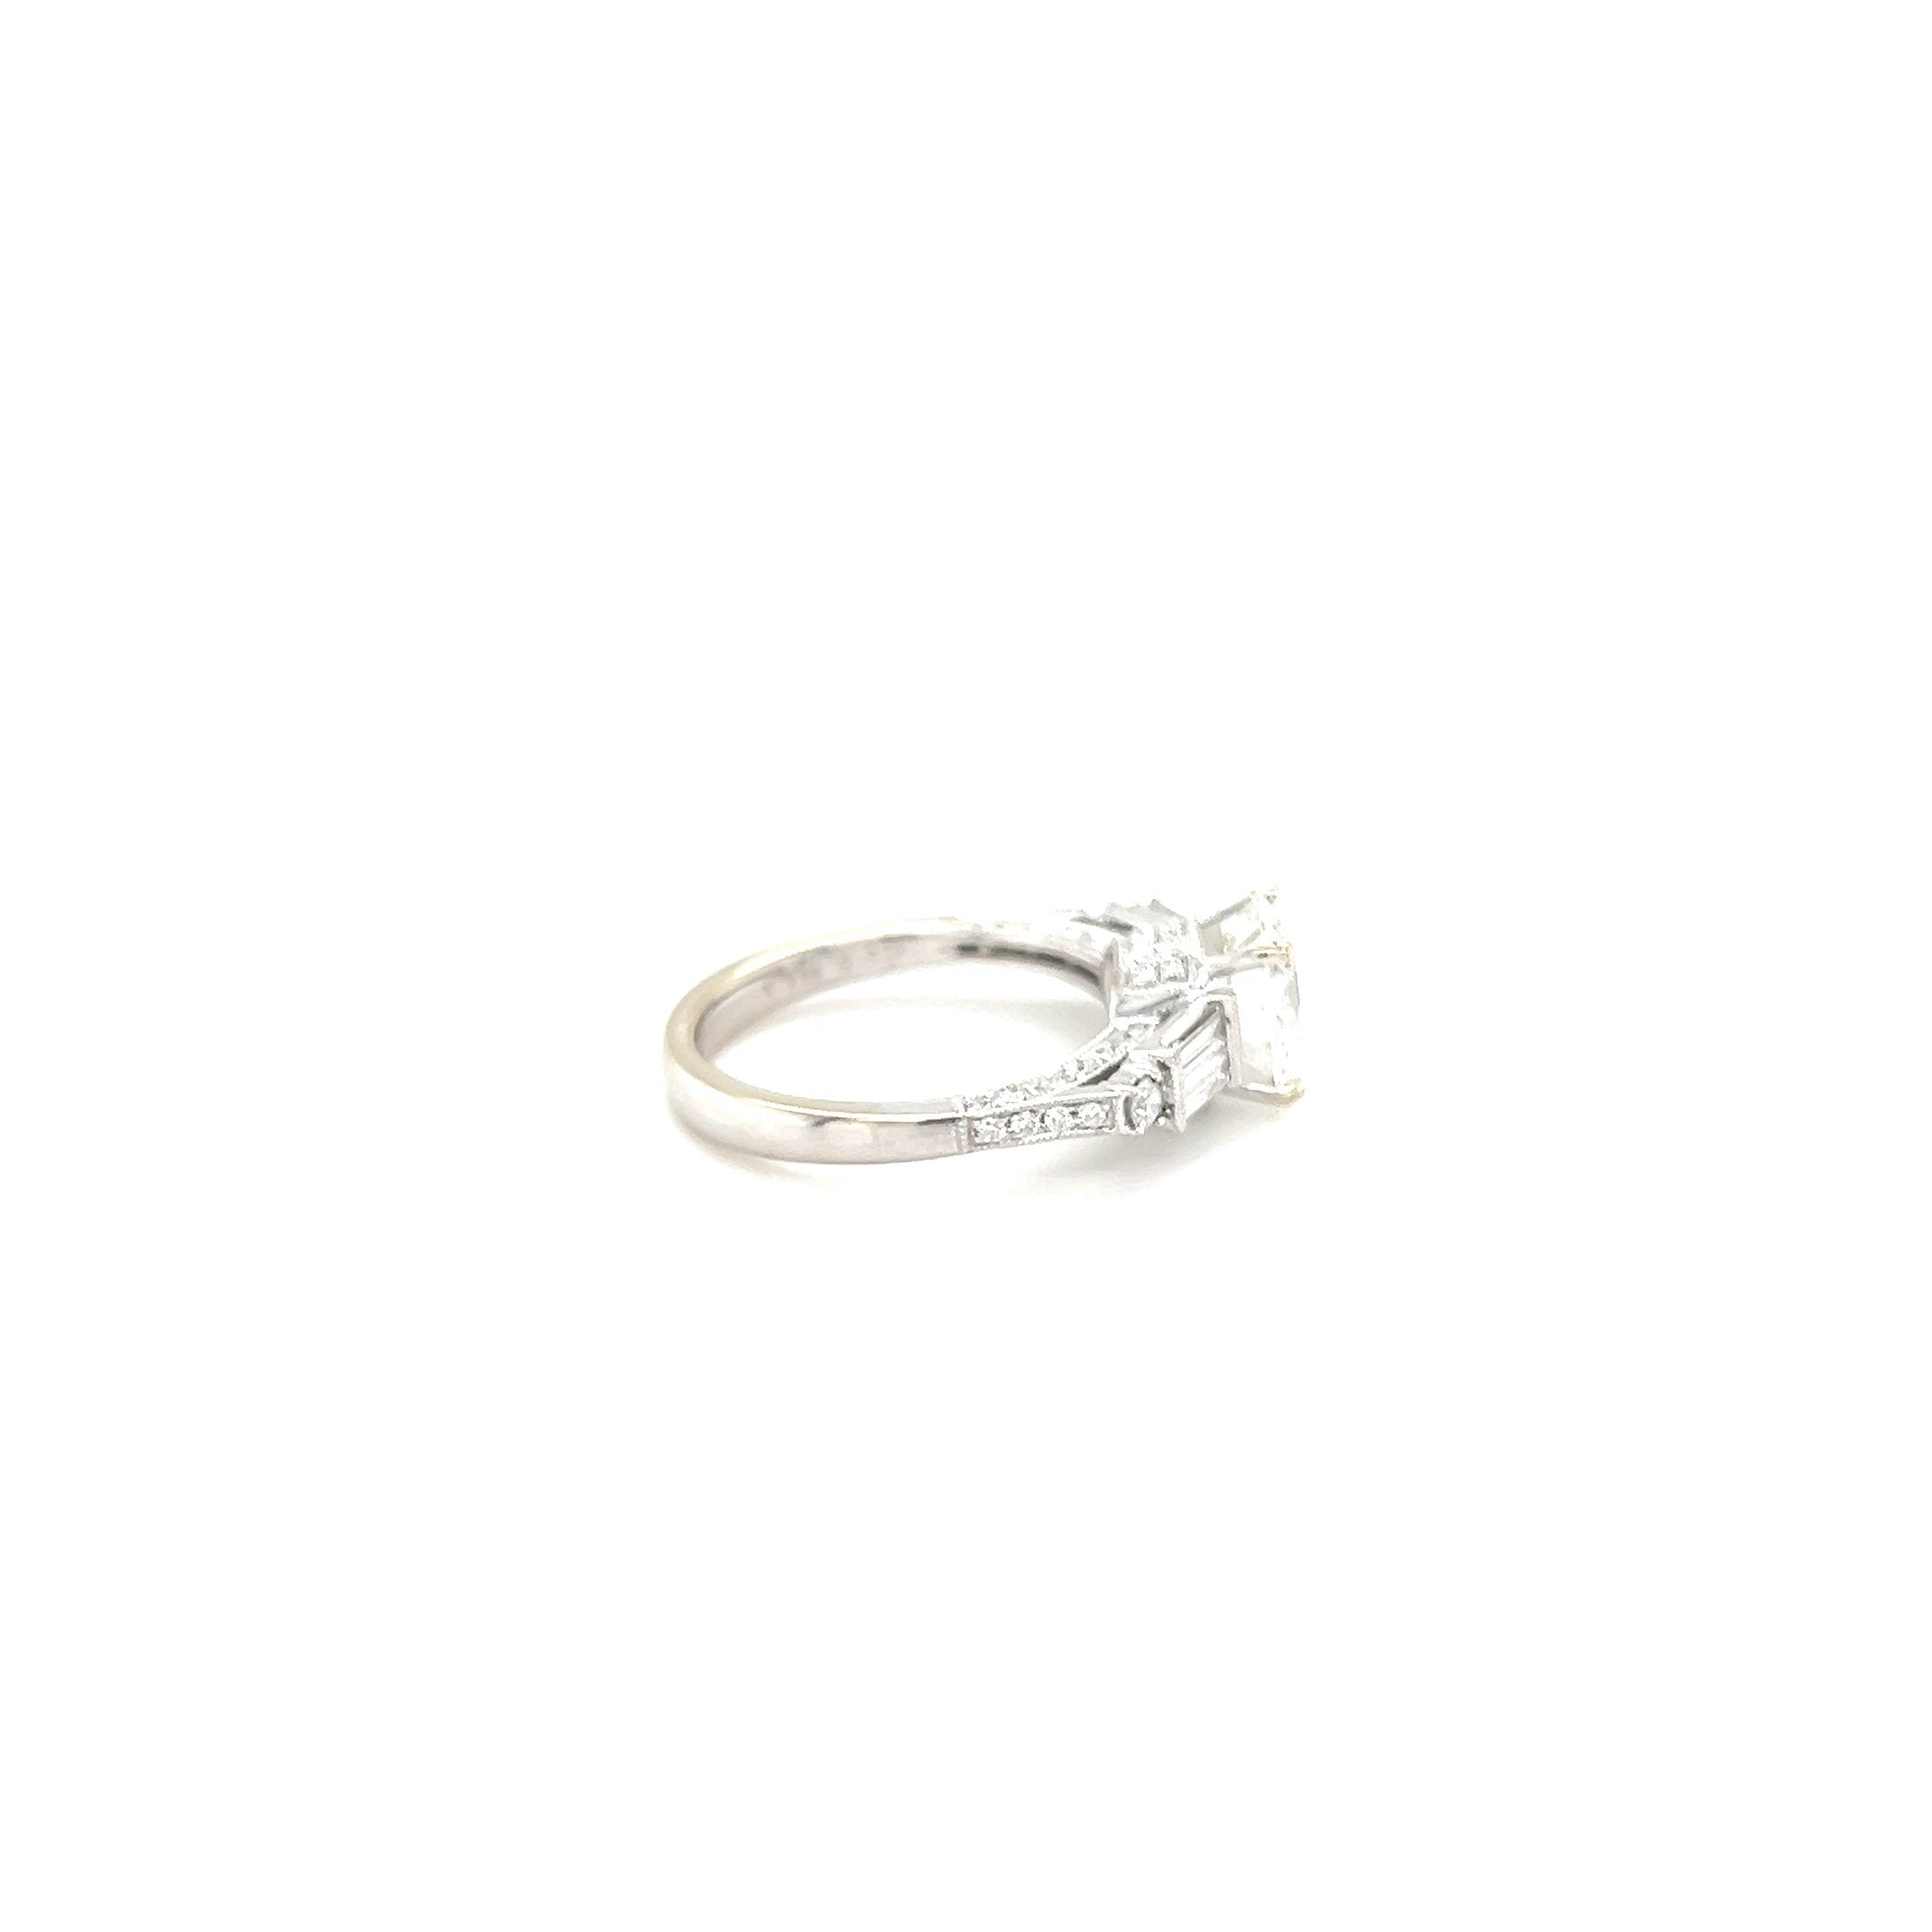 White Gold 18k Round Diamond 2.08 ctw Engagement Ring | I&I Diamonds in Coconut Creek, FL